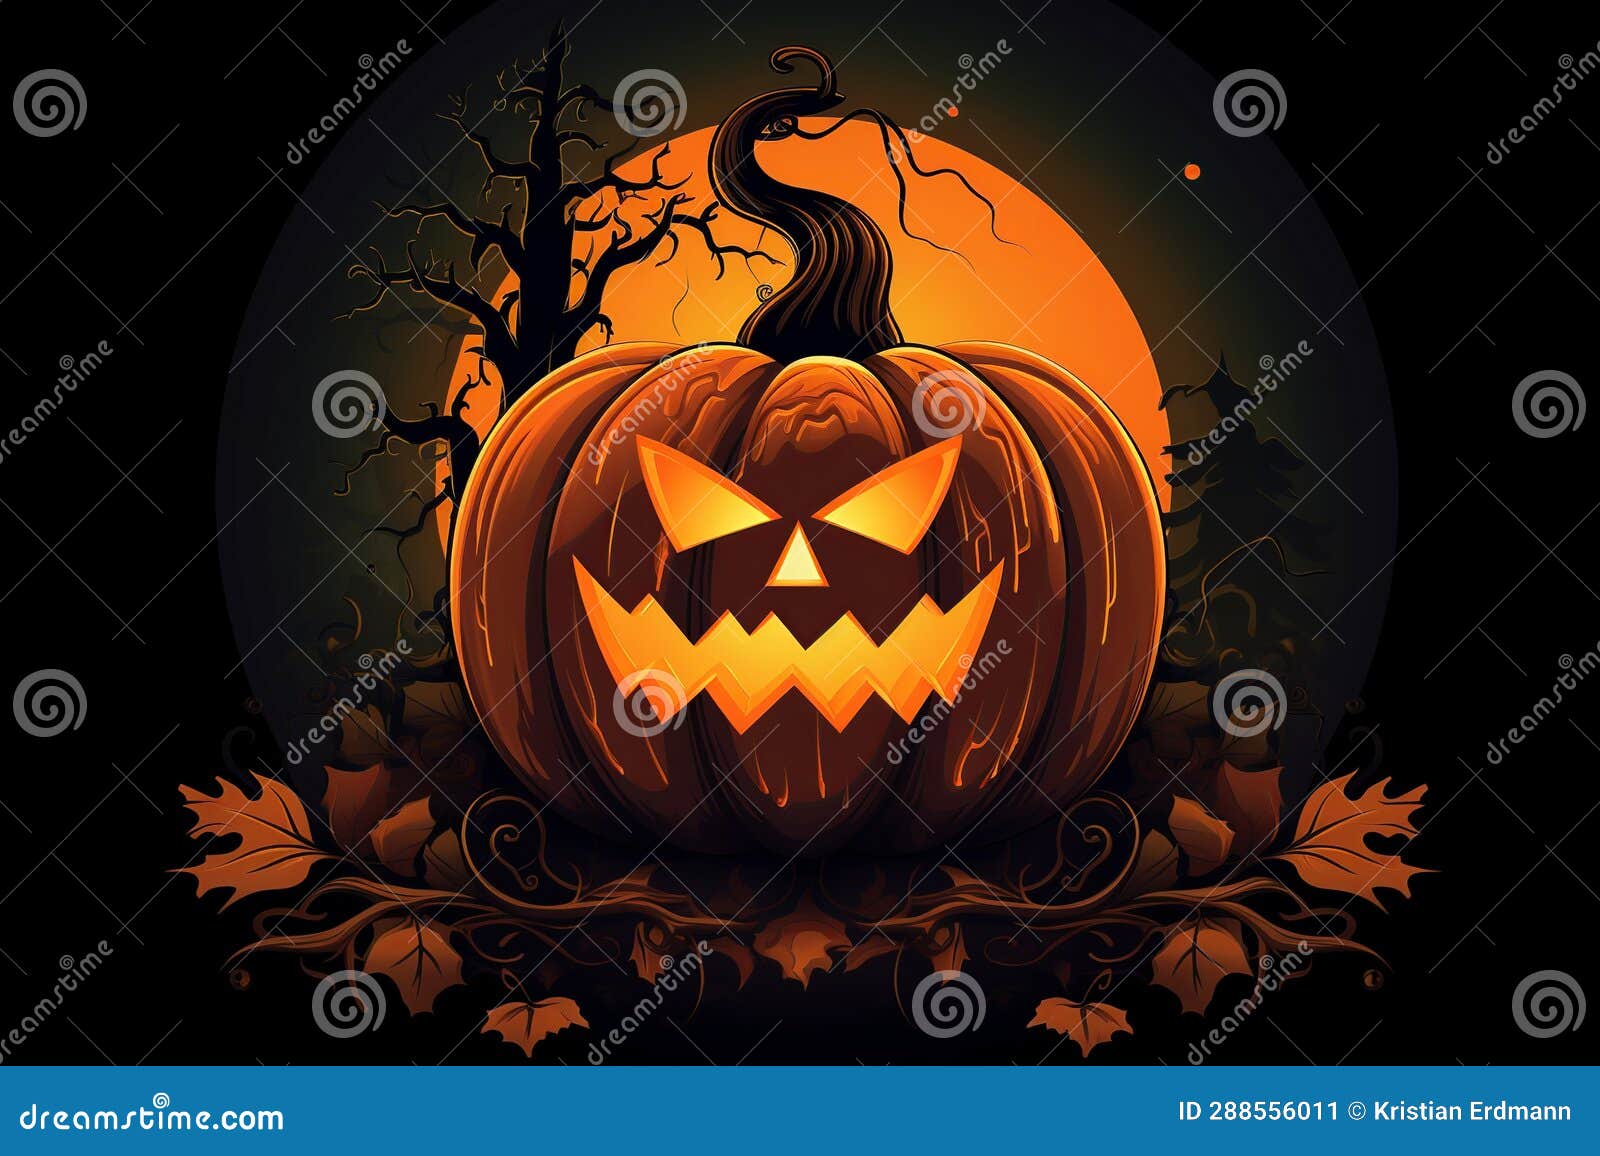 glowing menace: iconic halloween pumpkin lantern in flat 